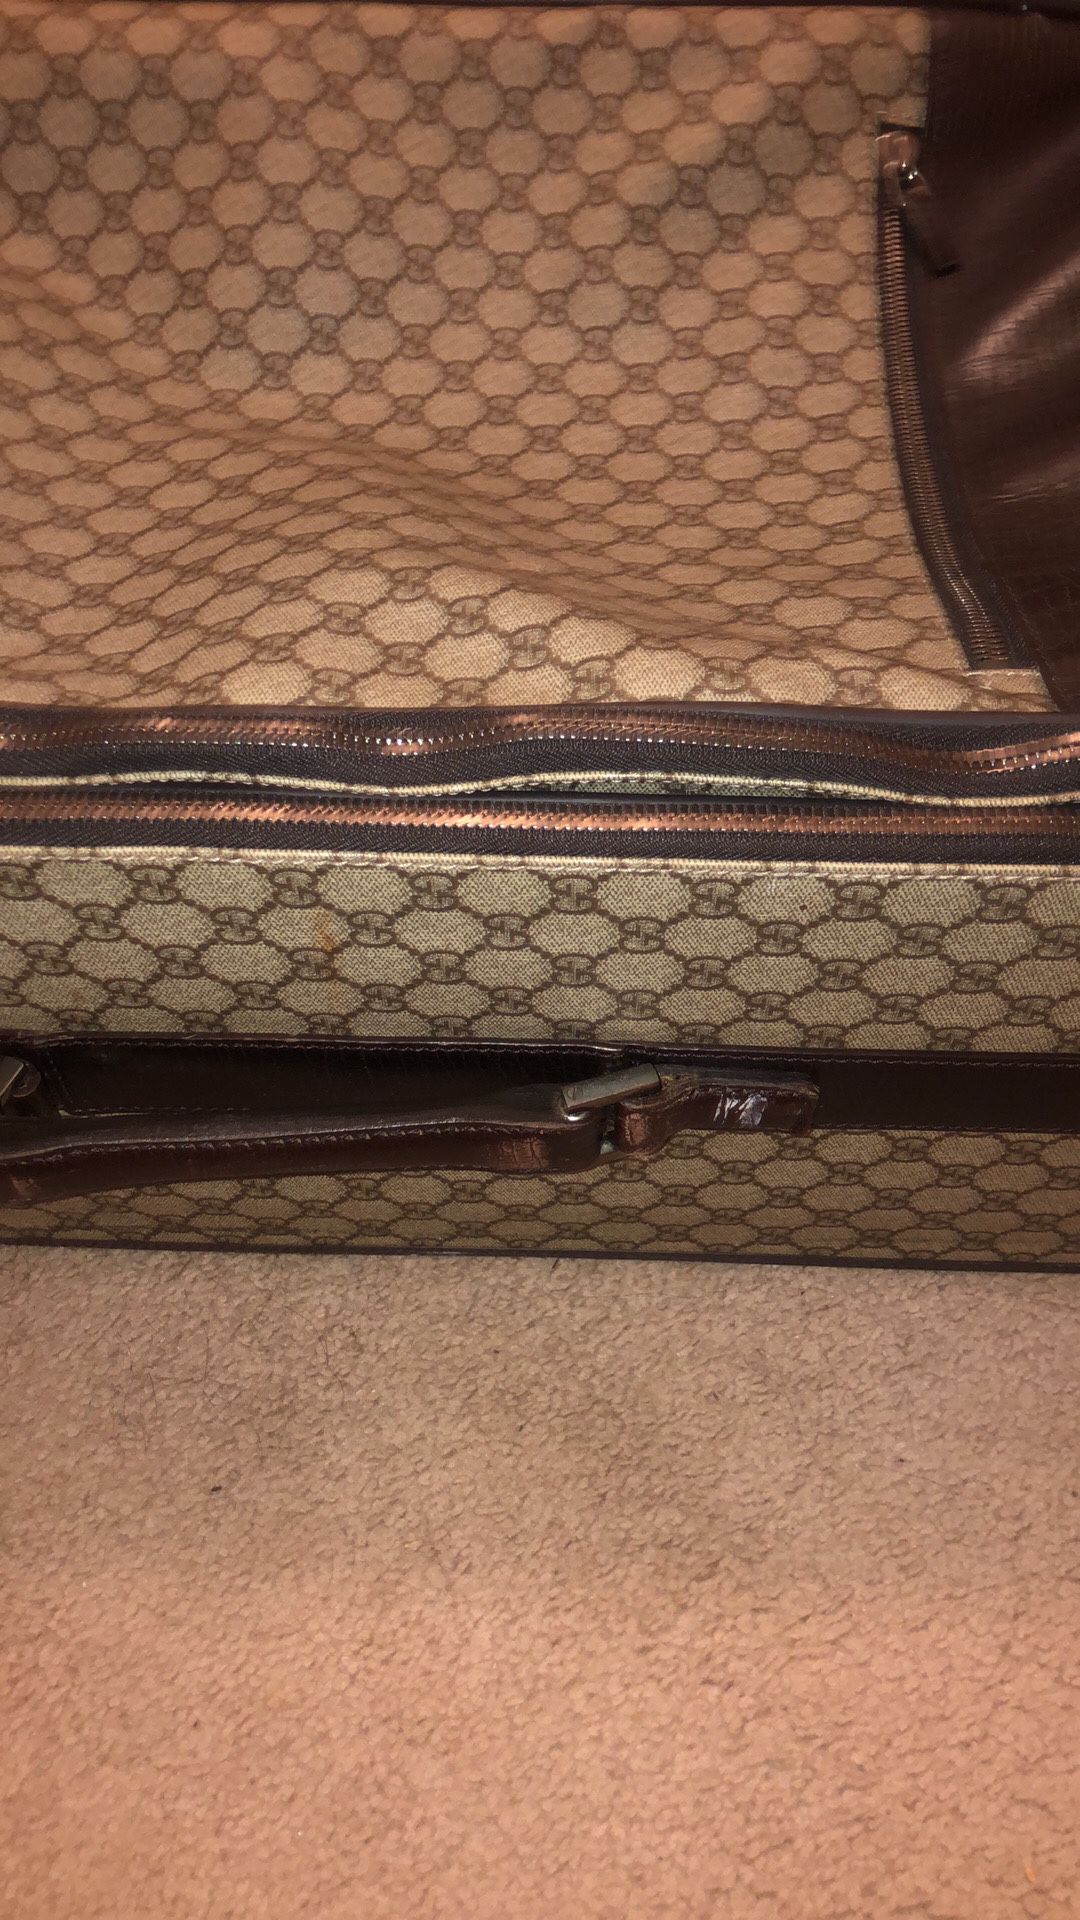 Gucci luggage